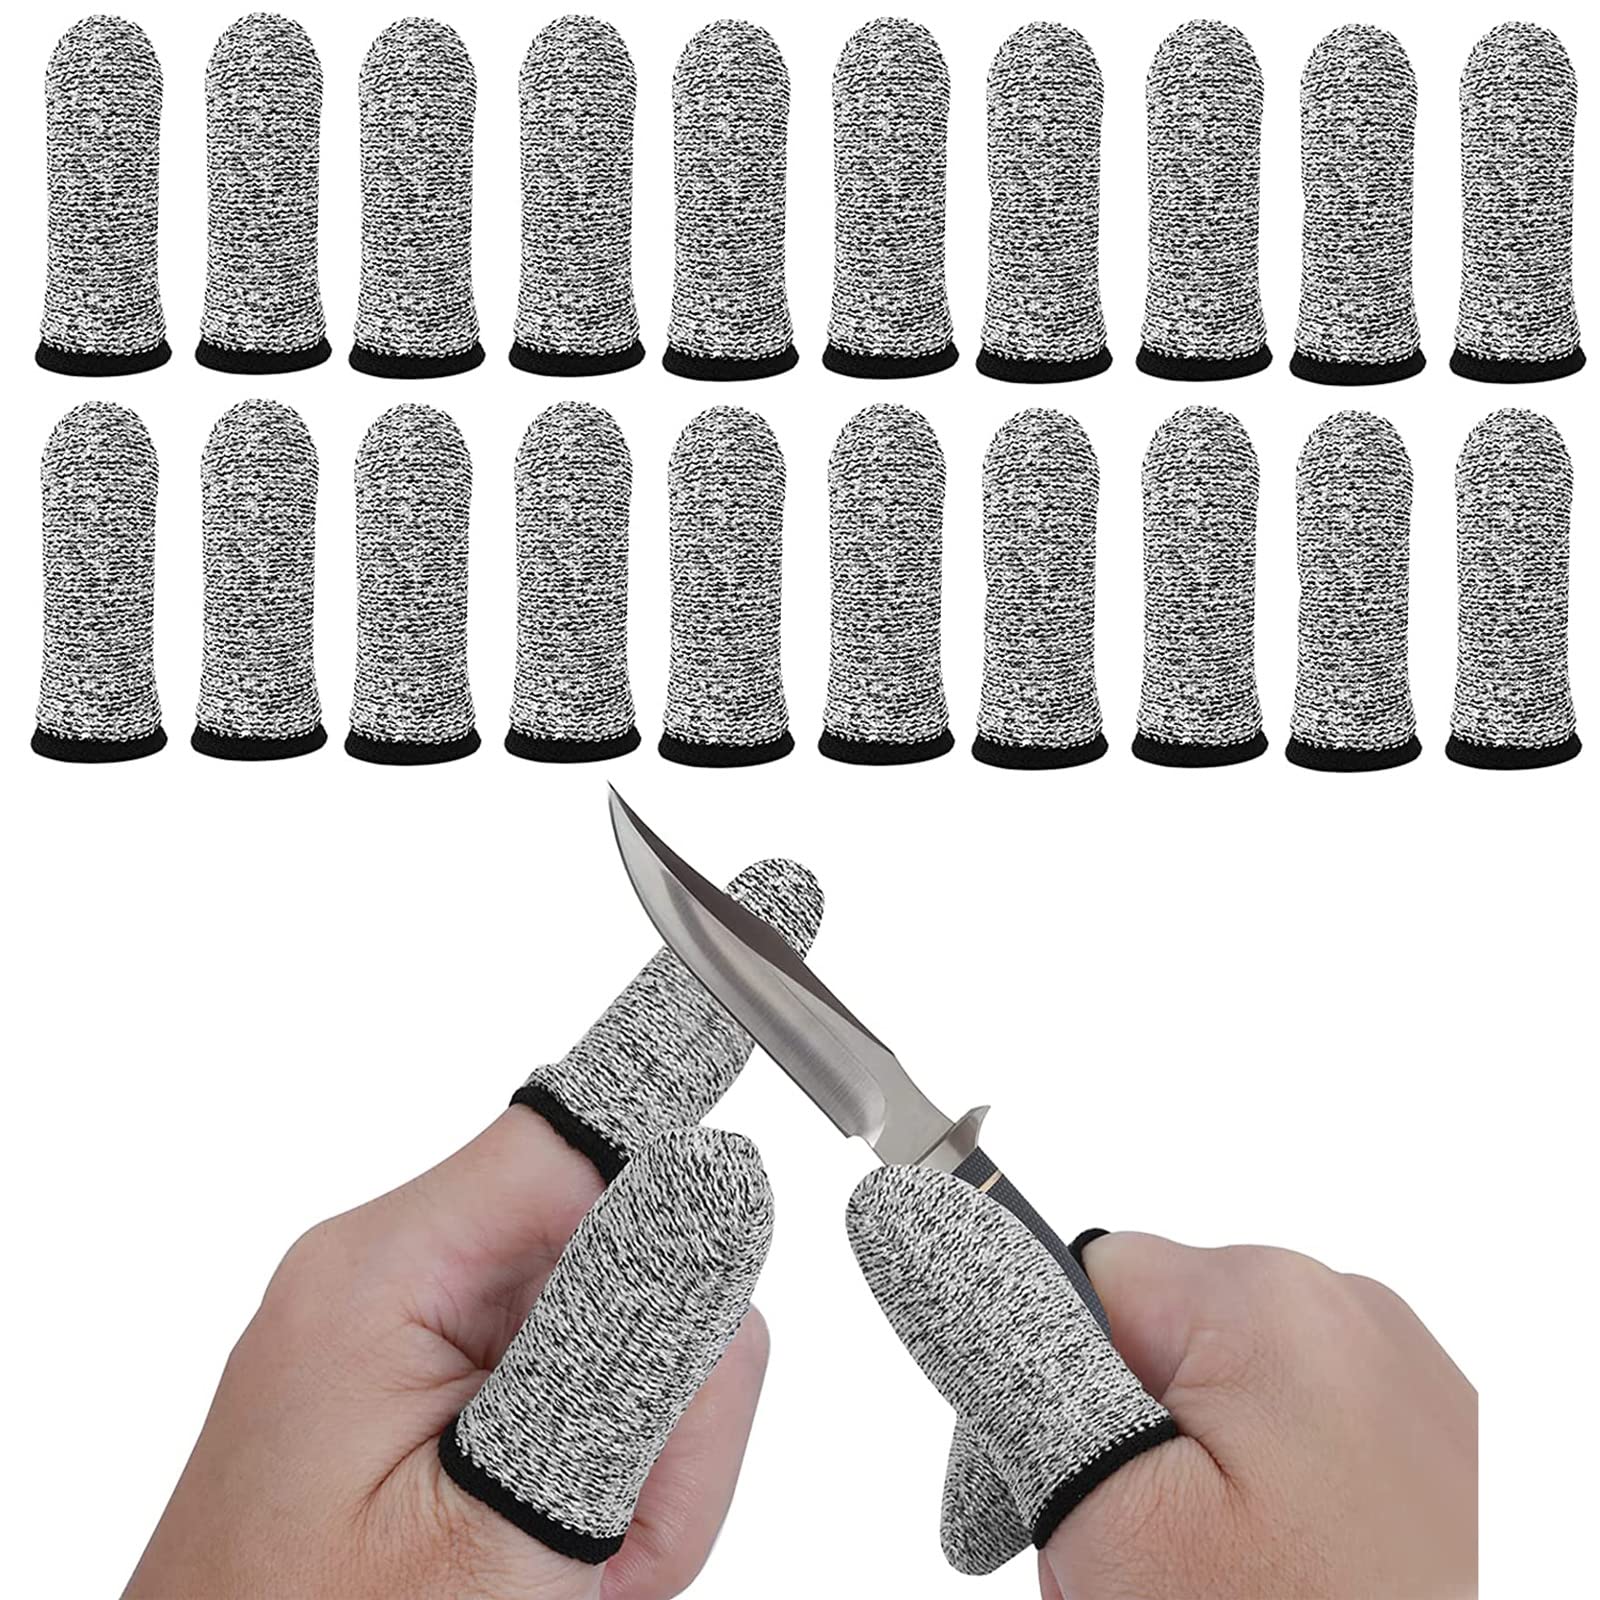 6 PCS Finger Cots Cut Resistant Protector, Finger Covers for Cuts, Gloves  Life Extender, Cut Resistant Finger Protectors for Kitchen, Work,  Sculpture